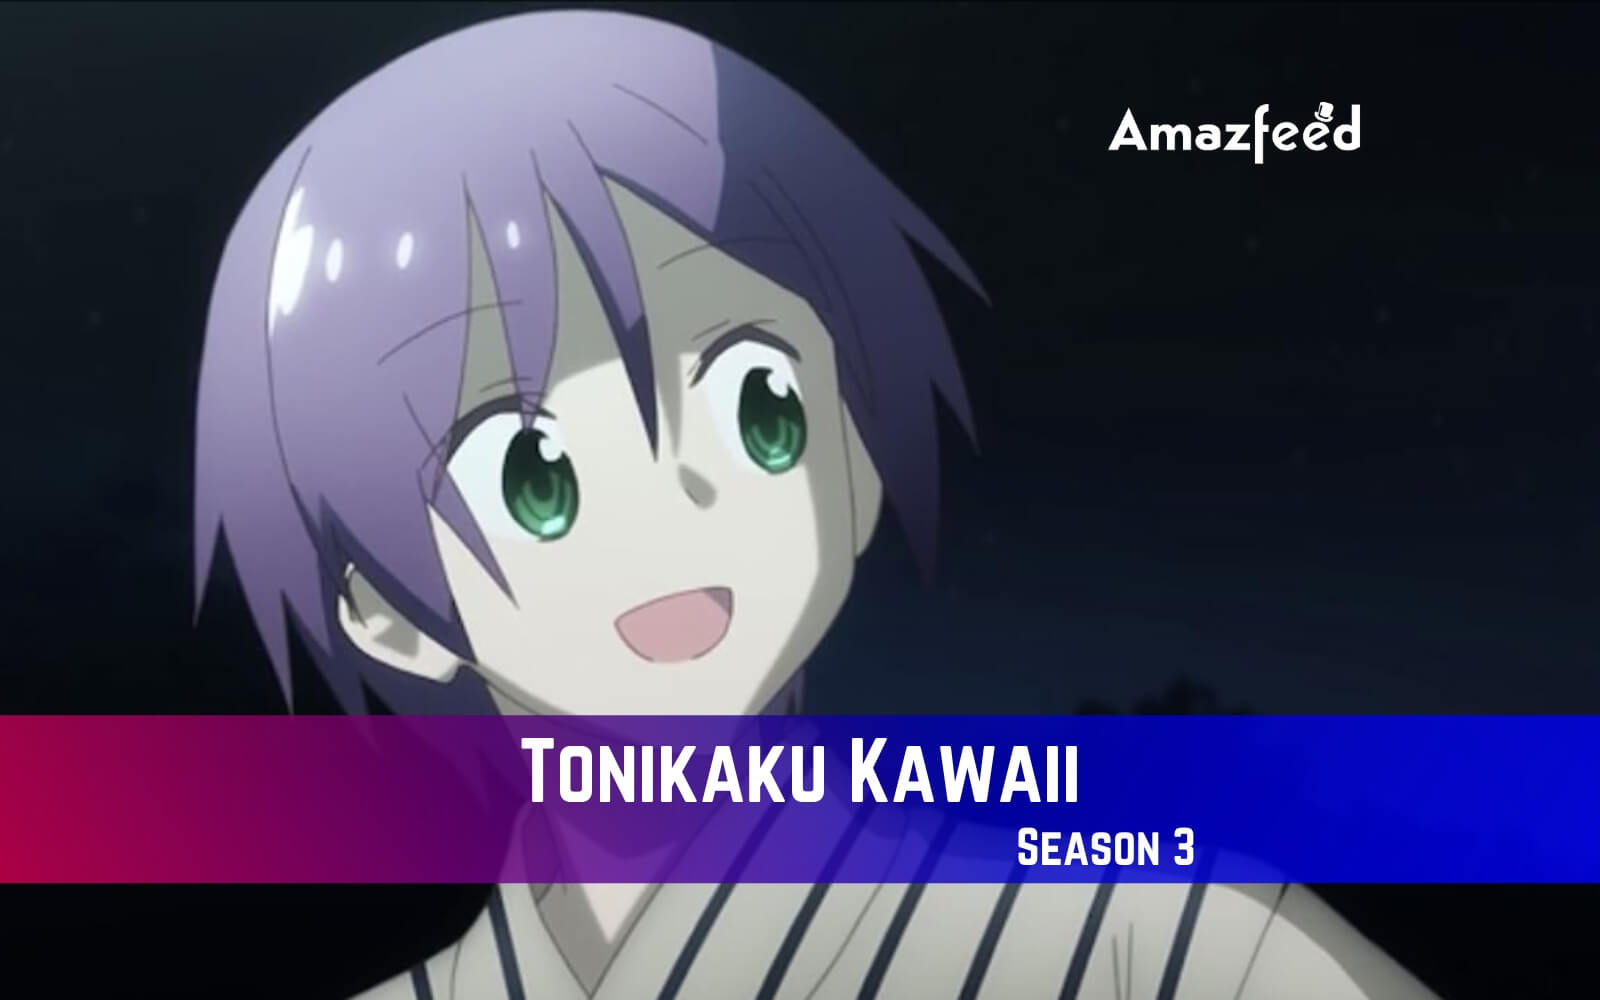 Tonikaku Kawaii season 2 release date, trailer, cast, and more news